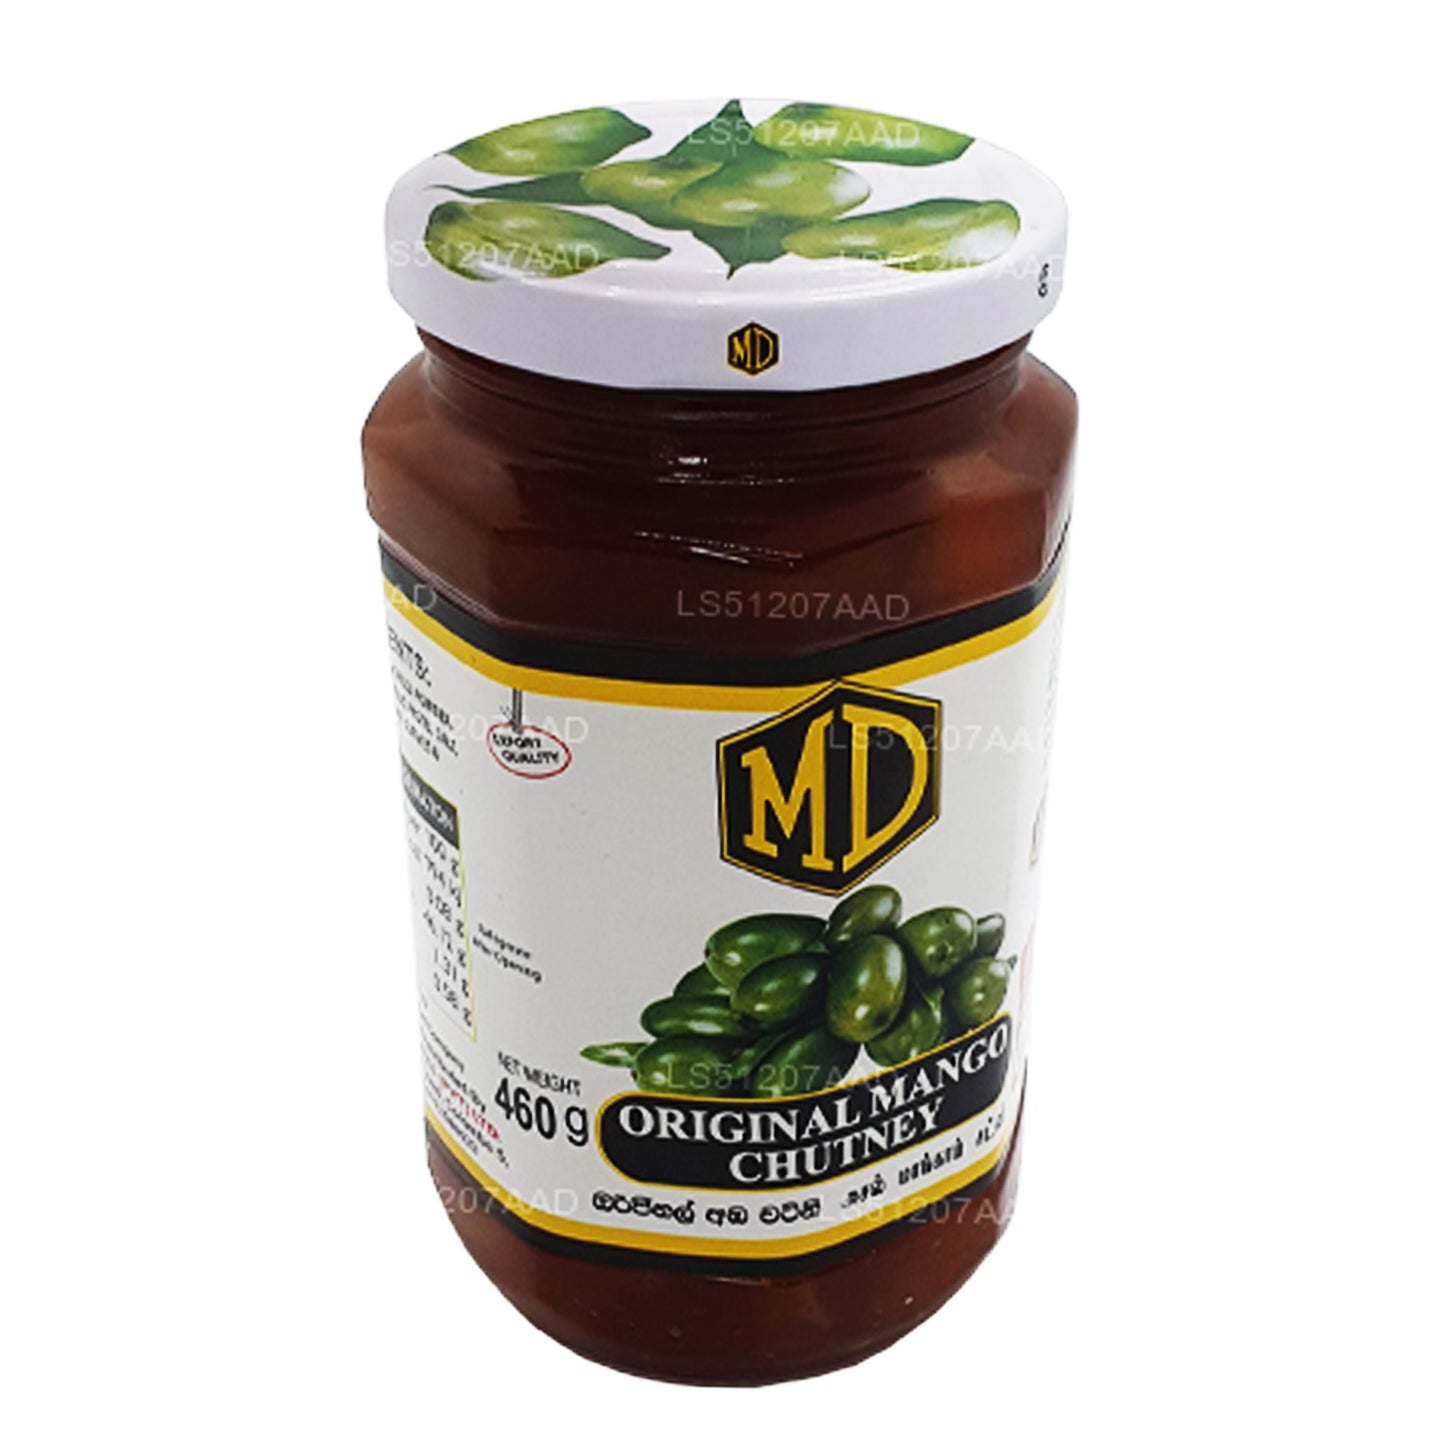 MD Original Mango Chutney (460 g)